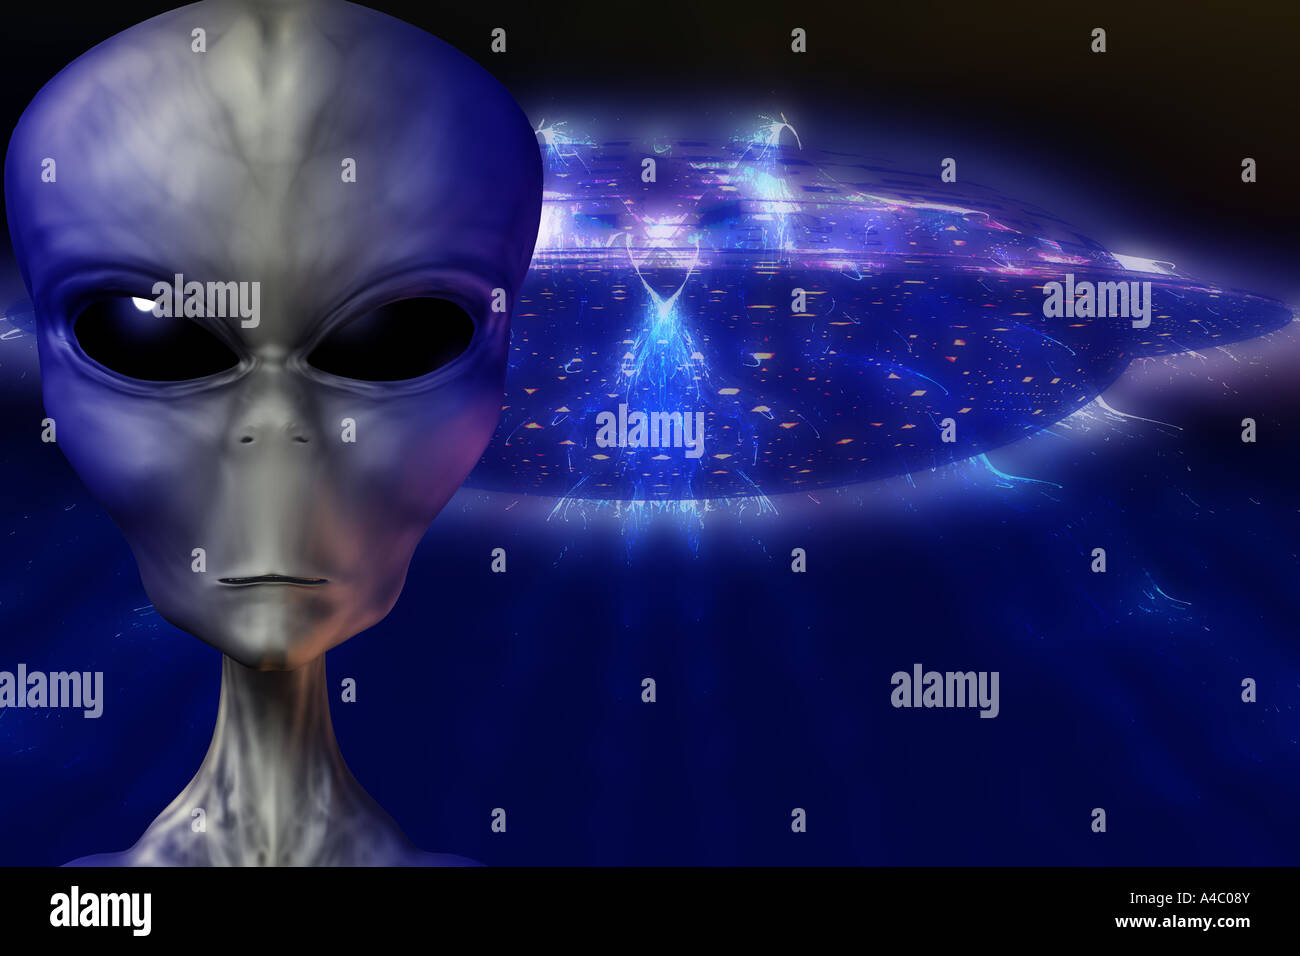 Alien. Stock Photo